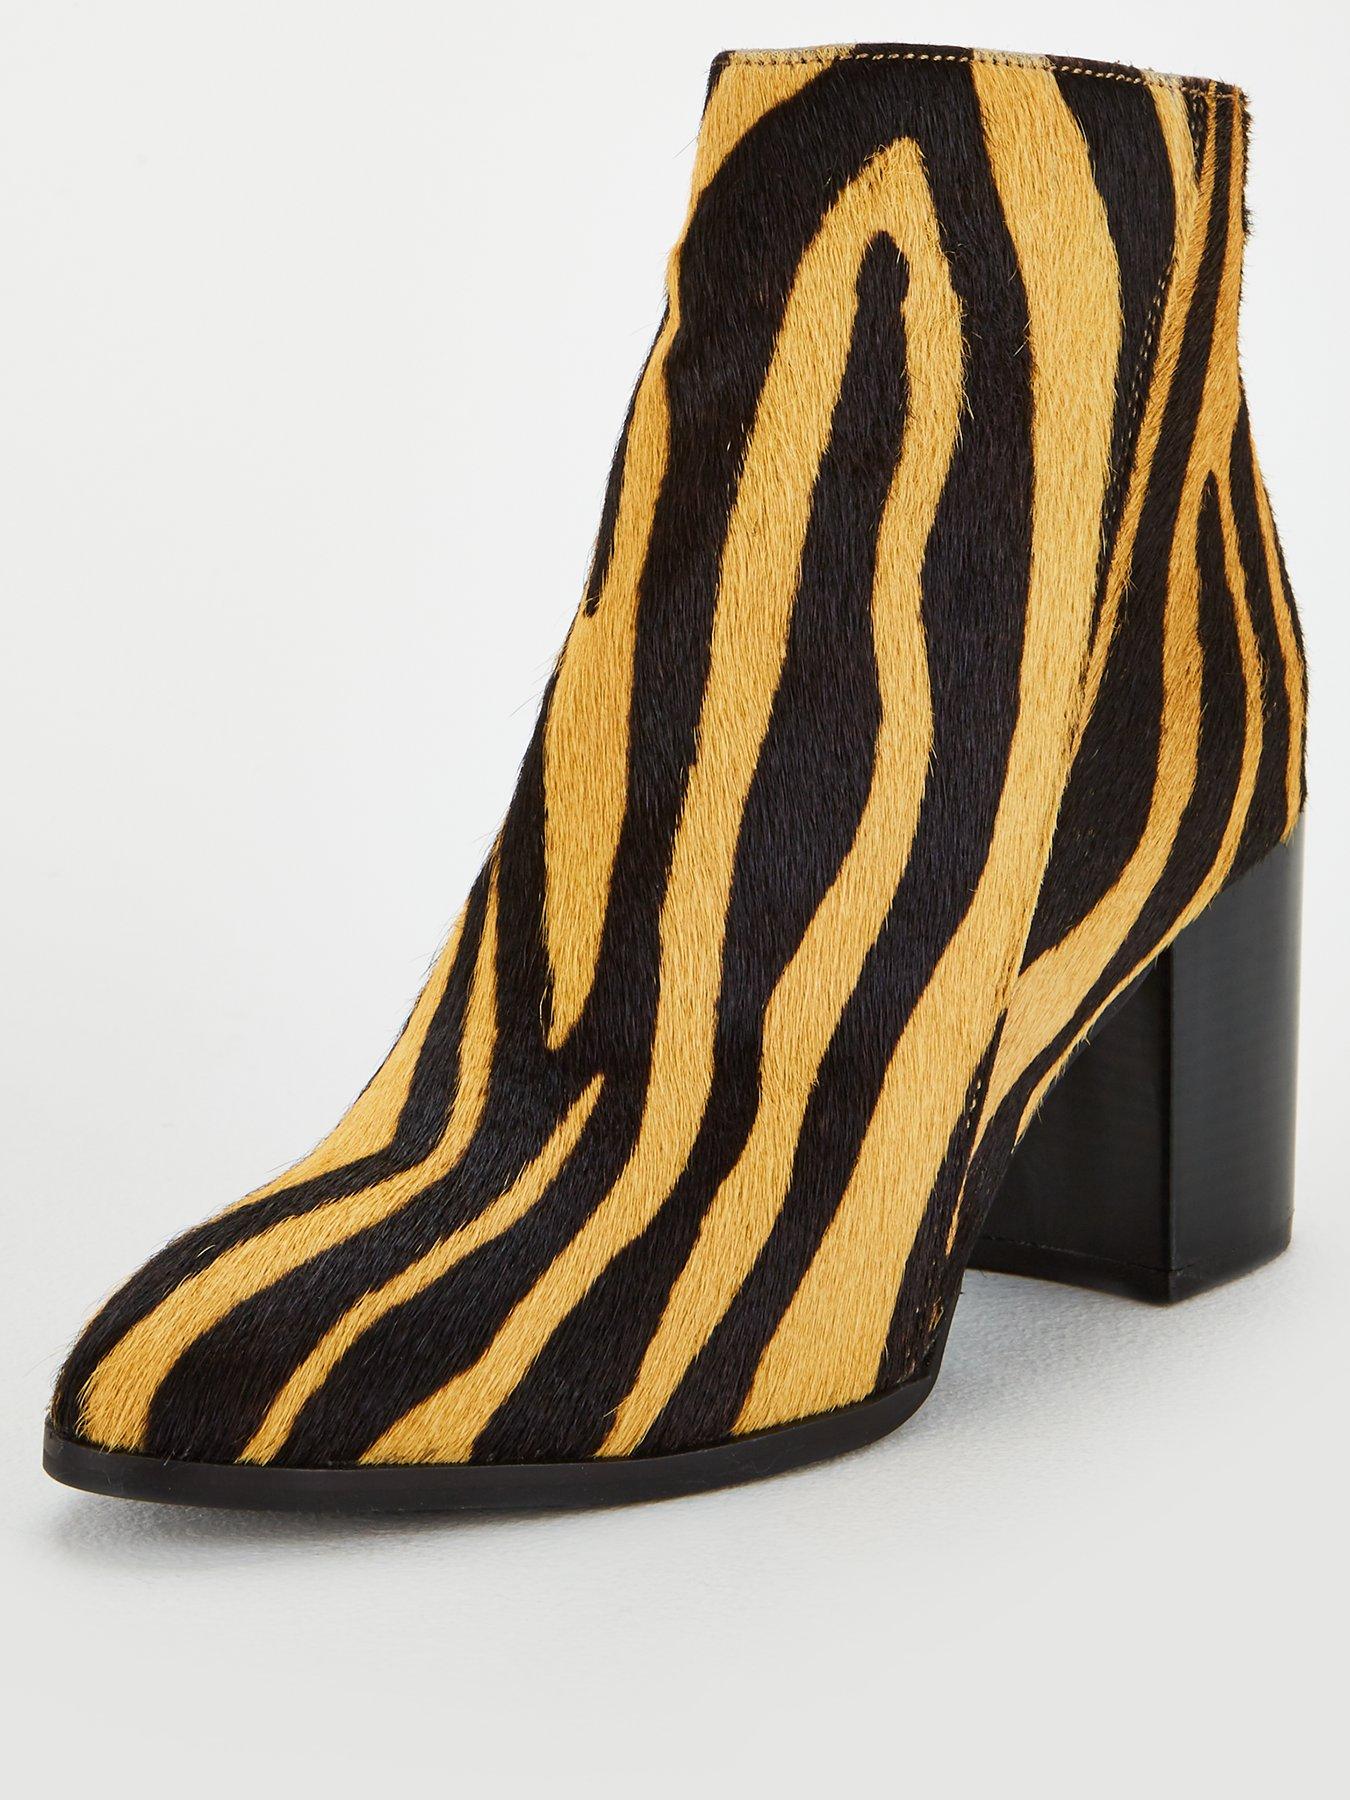 zebra print ankle boots uk